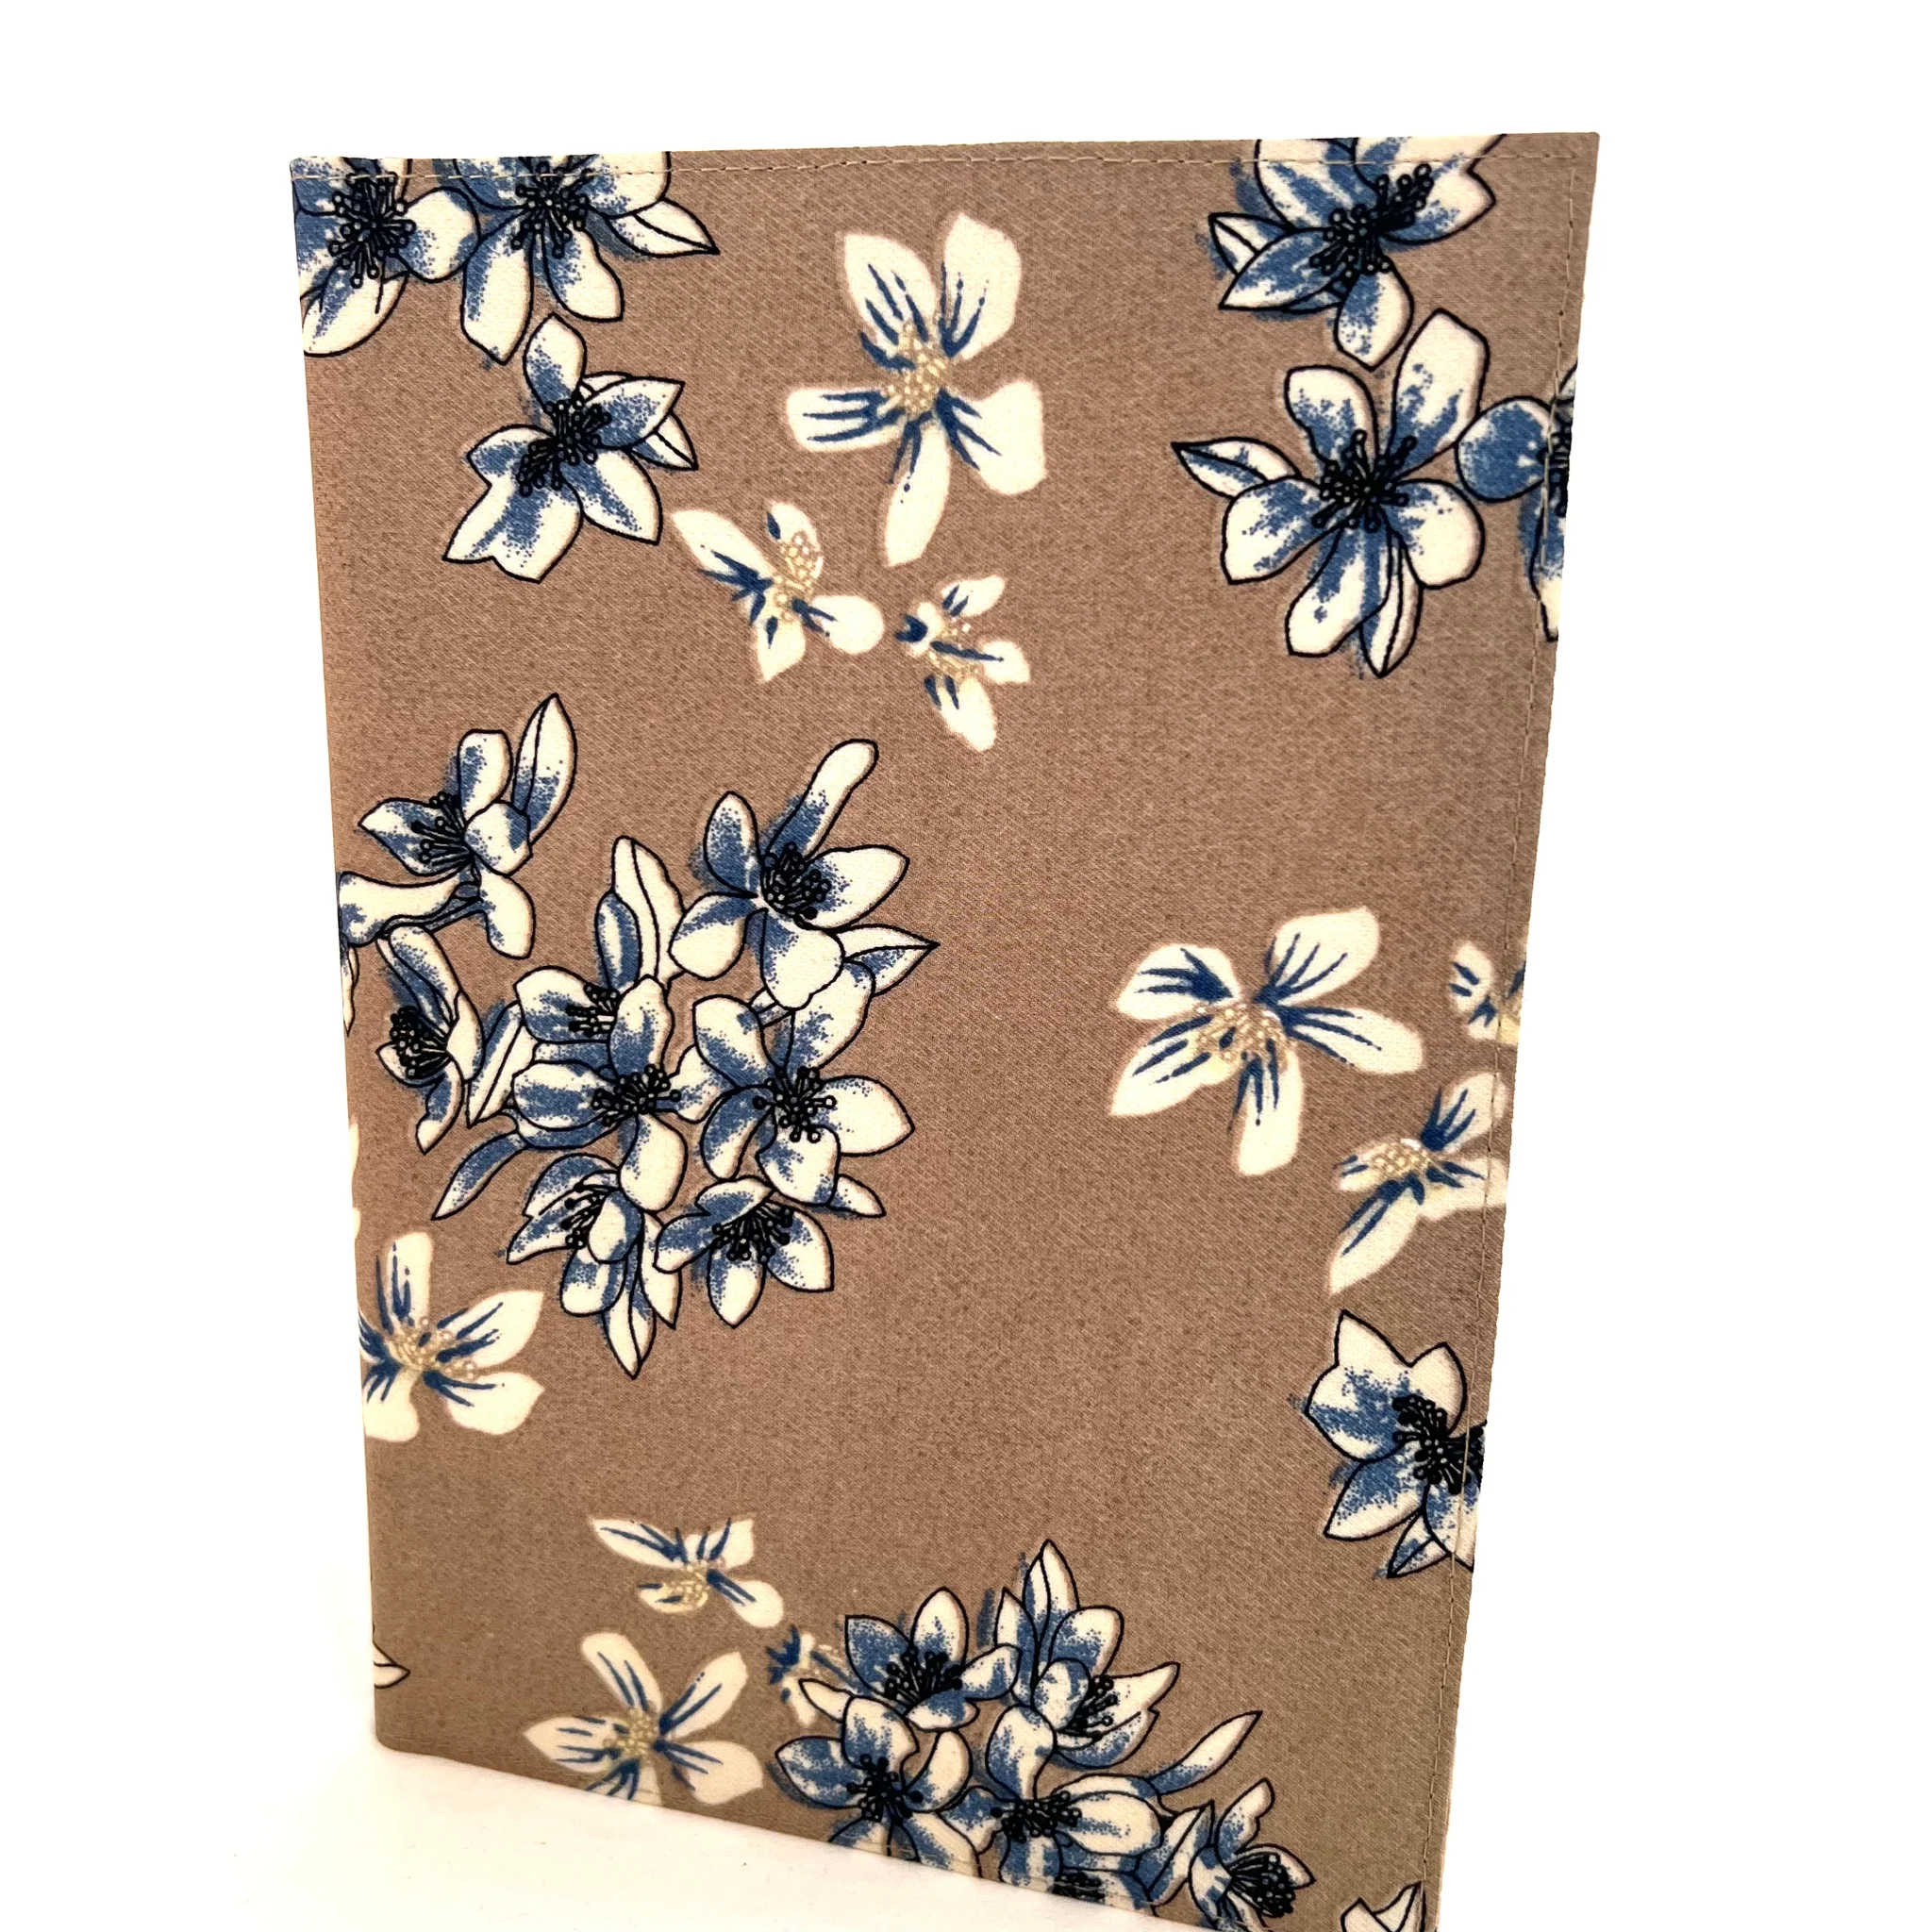 Fabric Journal with Zipper Pocket